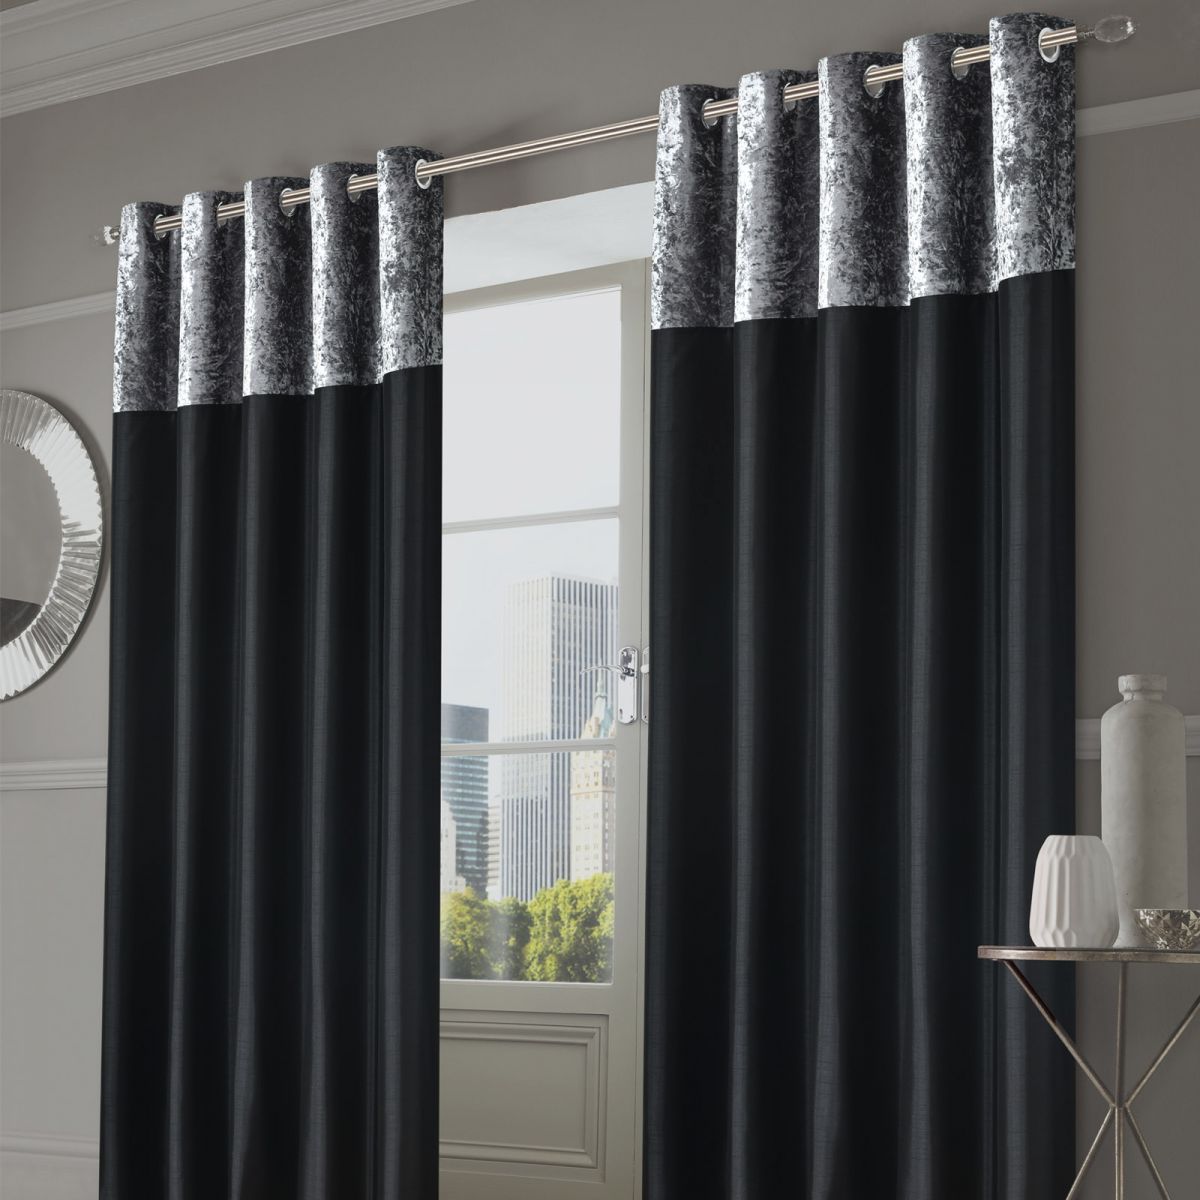 Sienna Home Manhattan Crushed Velvet Band Eyelet Curtains - Black, 46" x 72"